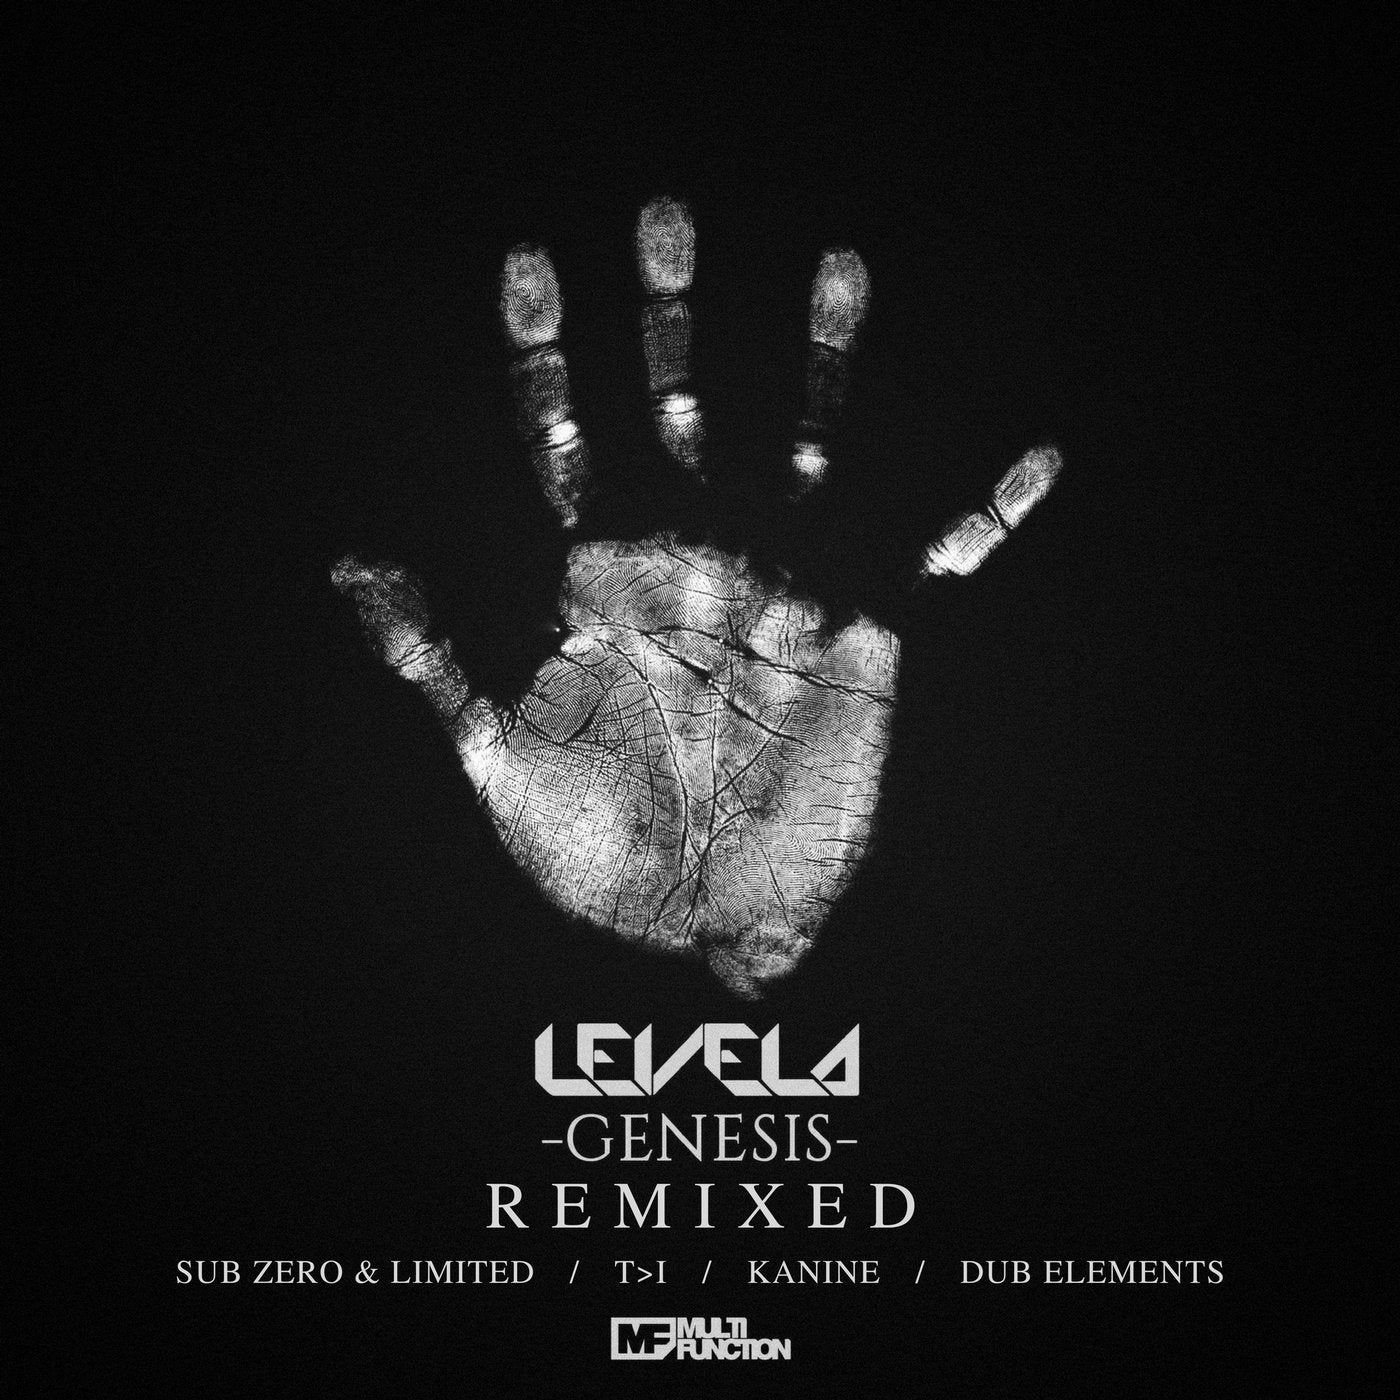 Remix limited